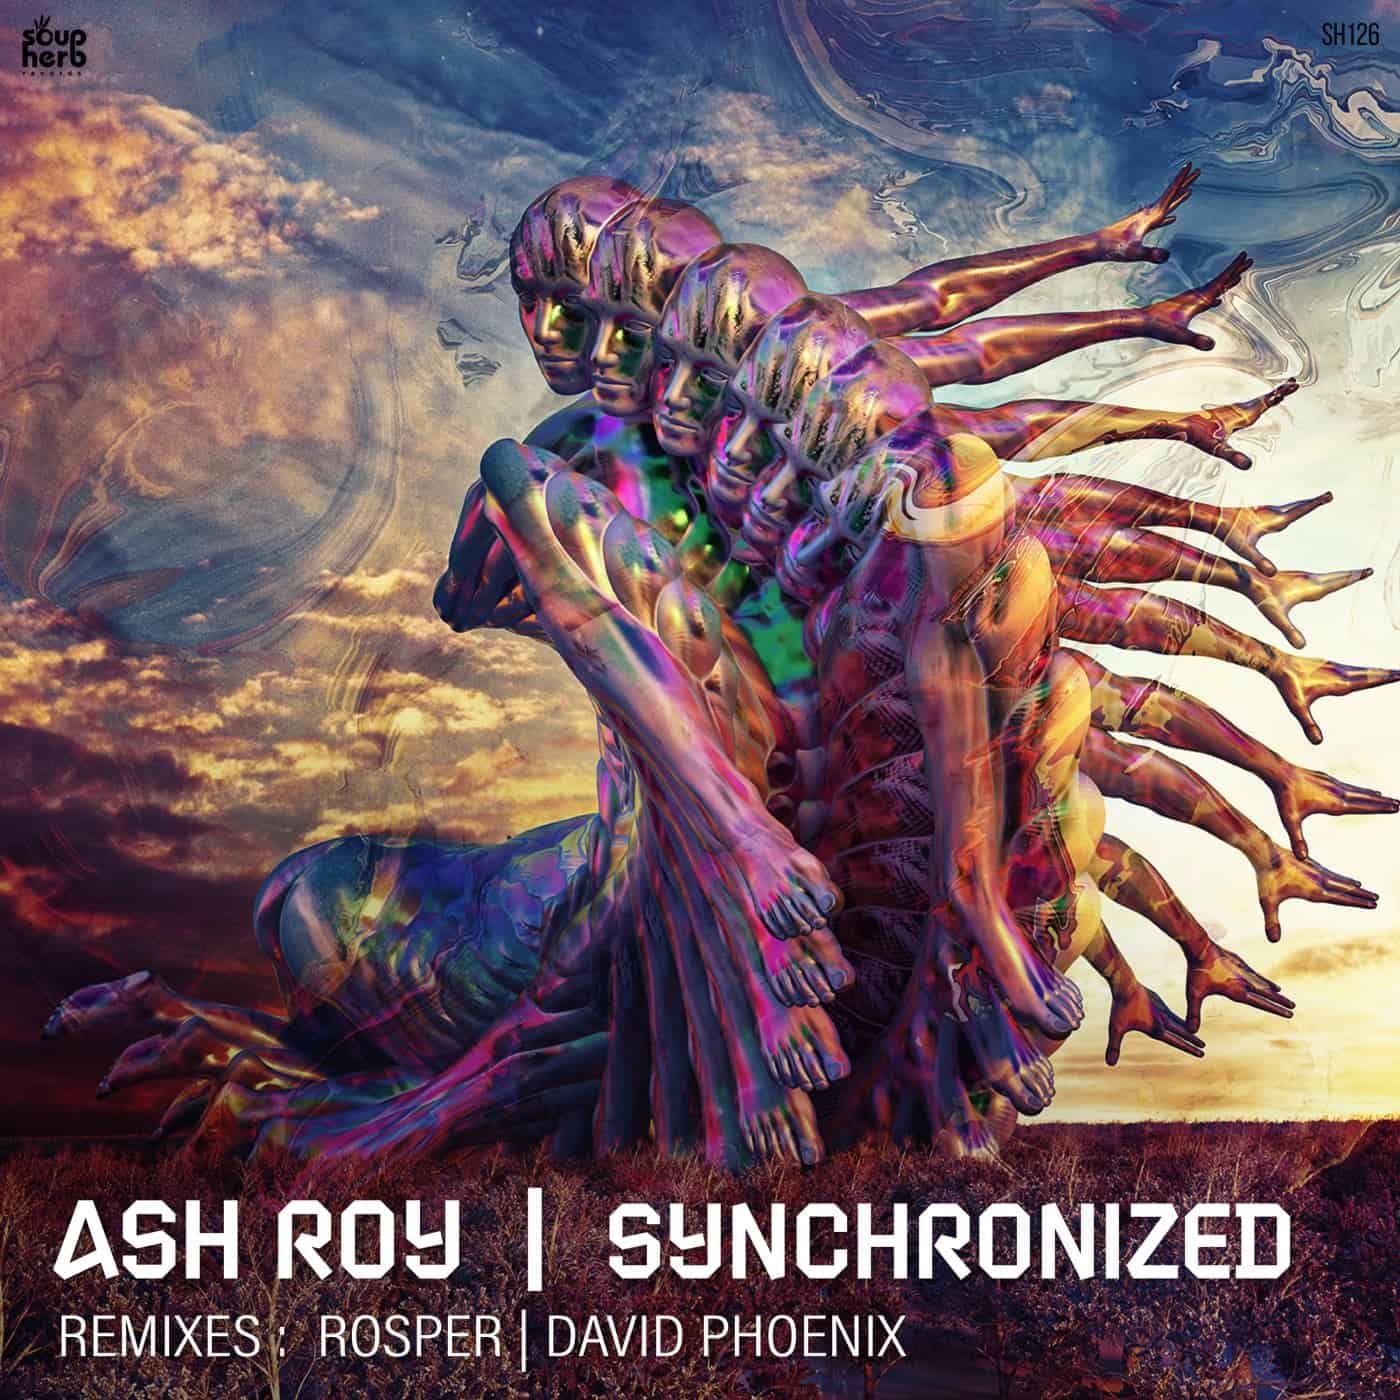 image cover: Ash Roy - Synchronized / SH126